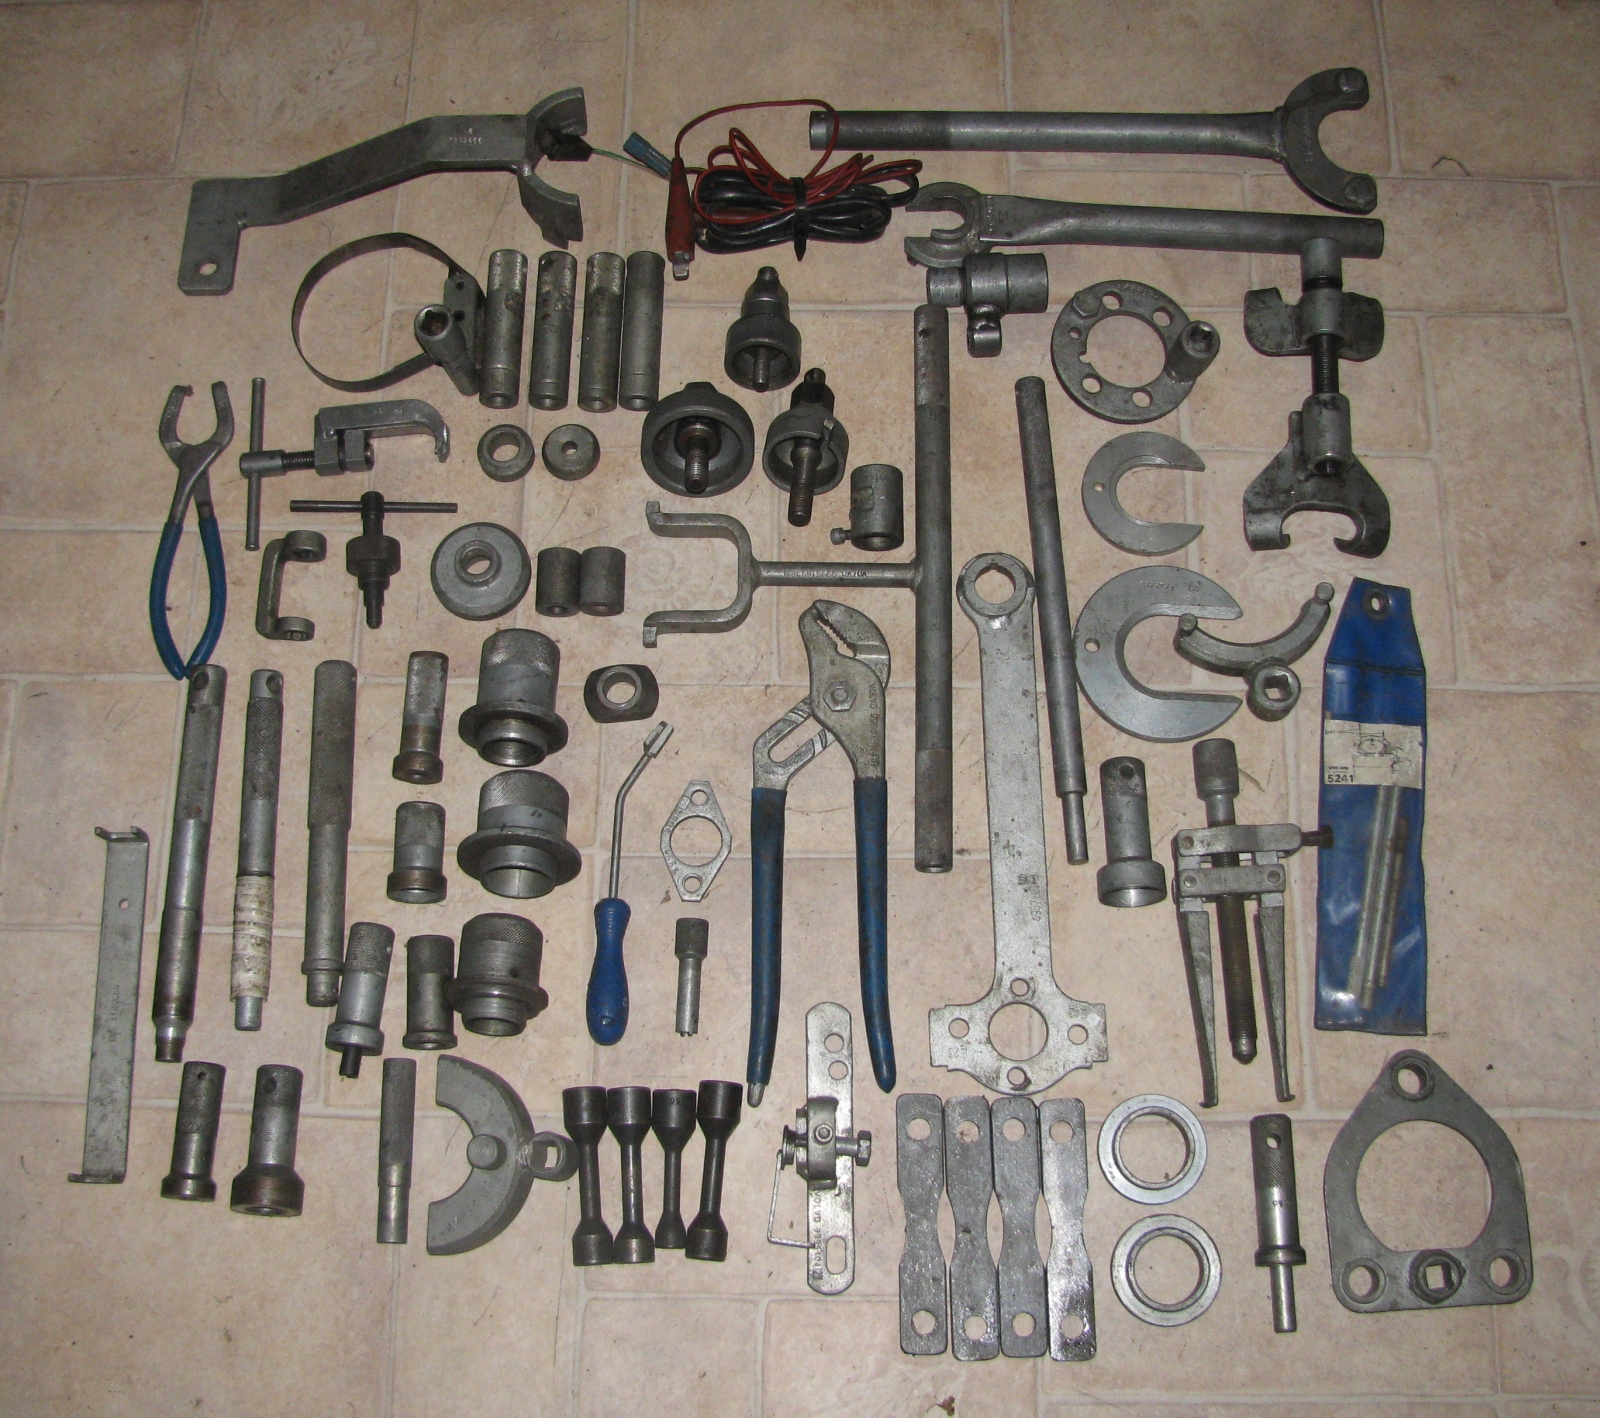 Volvo tools